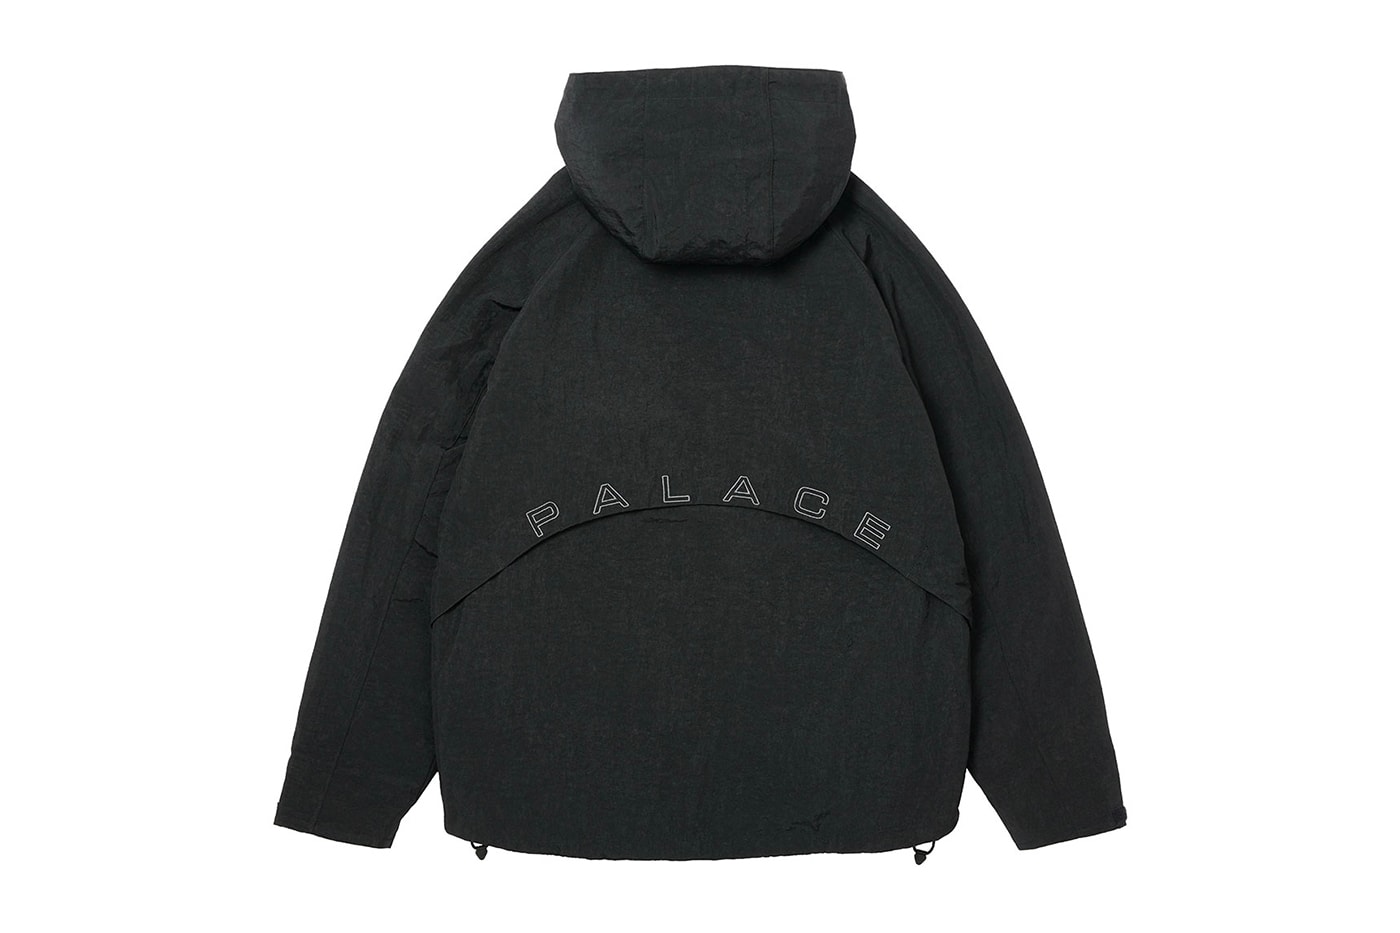 Palace Winter 2020 Jackets outerwear collection drop info gore-tex outerwear coats jackets wool sherpa fleece winter gold waterproof 